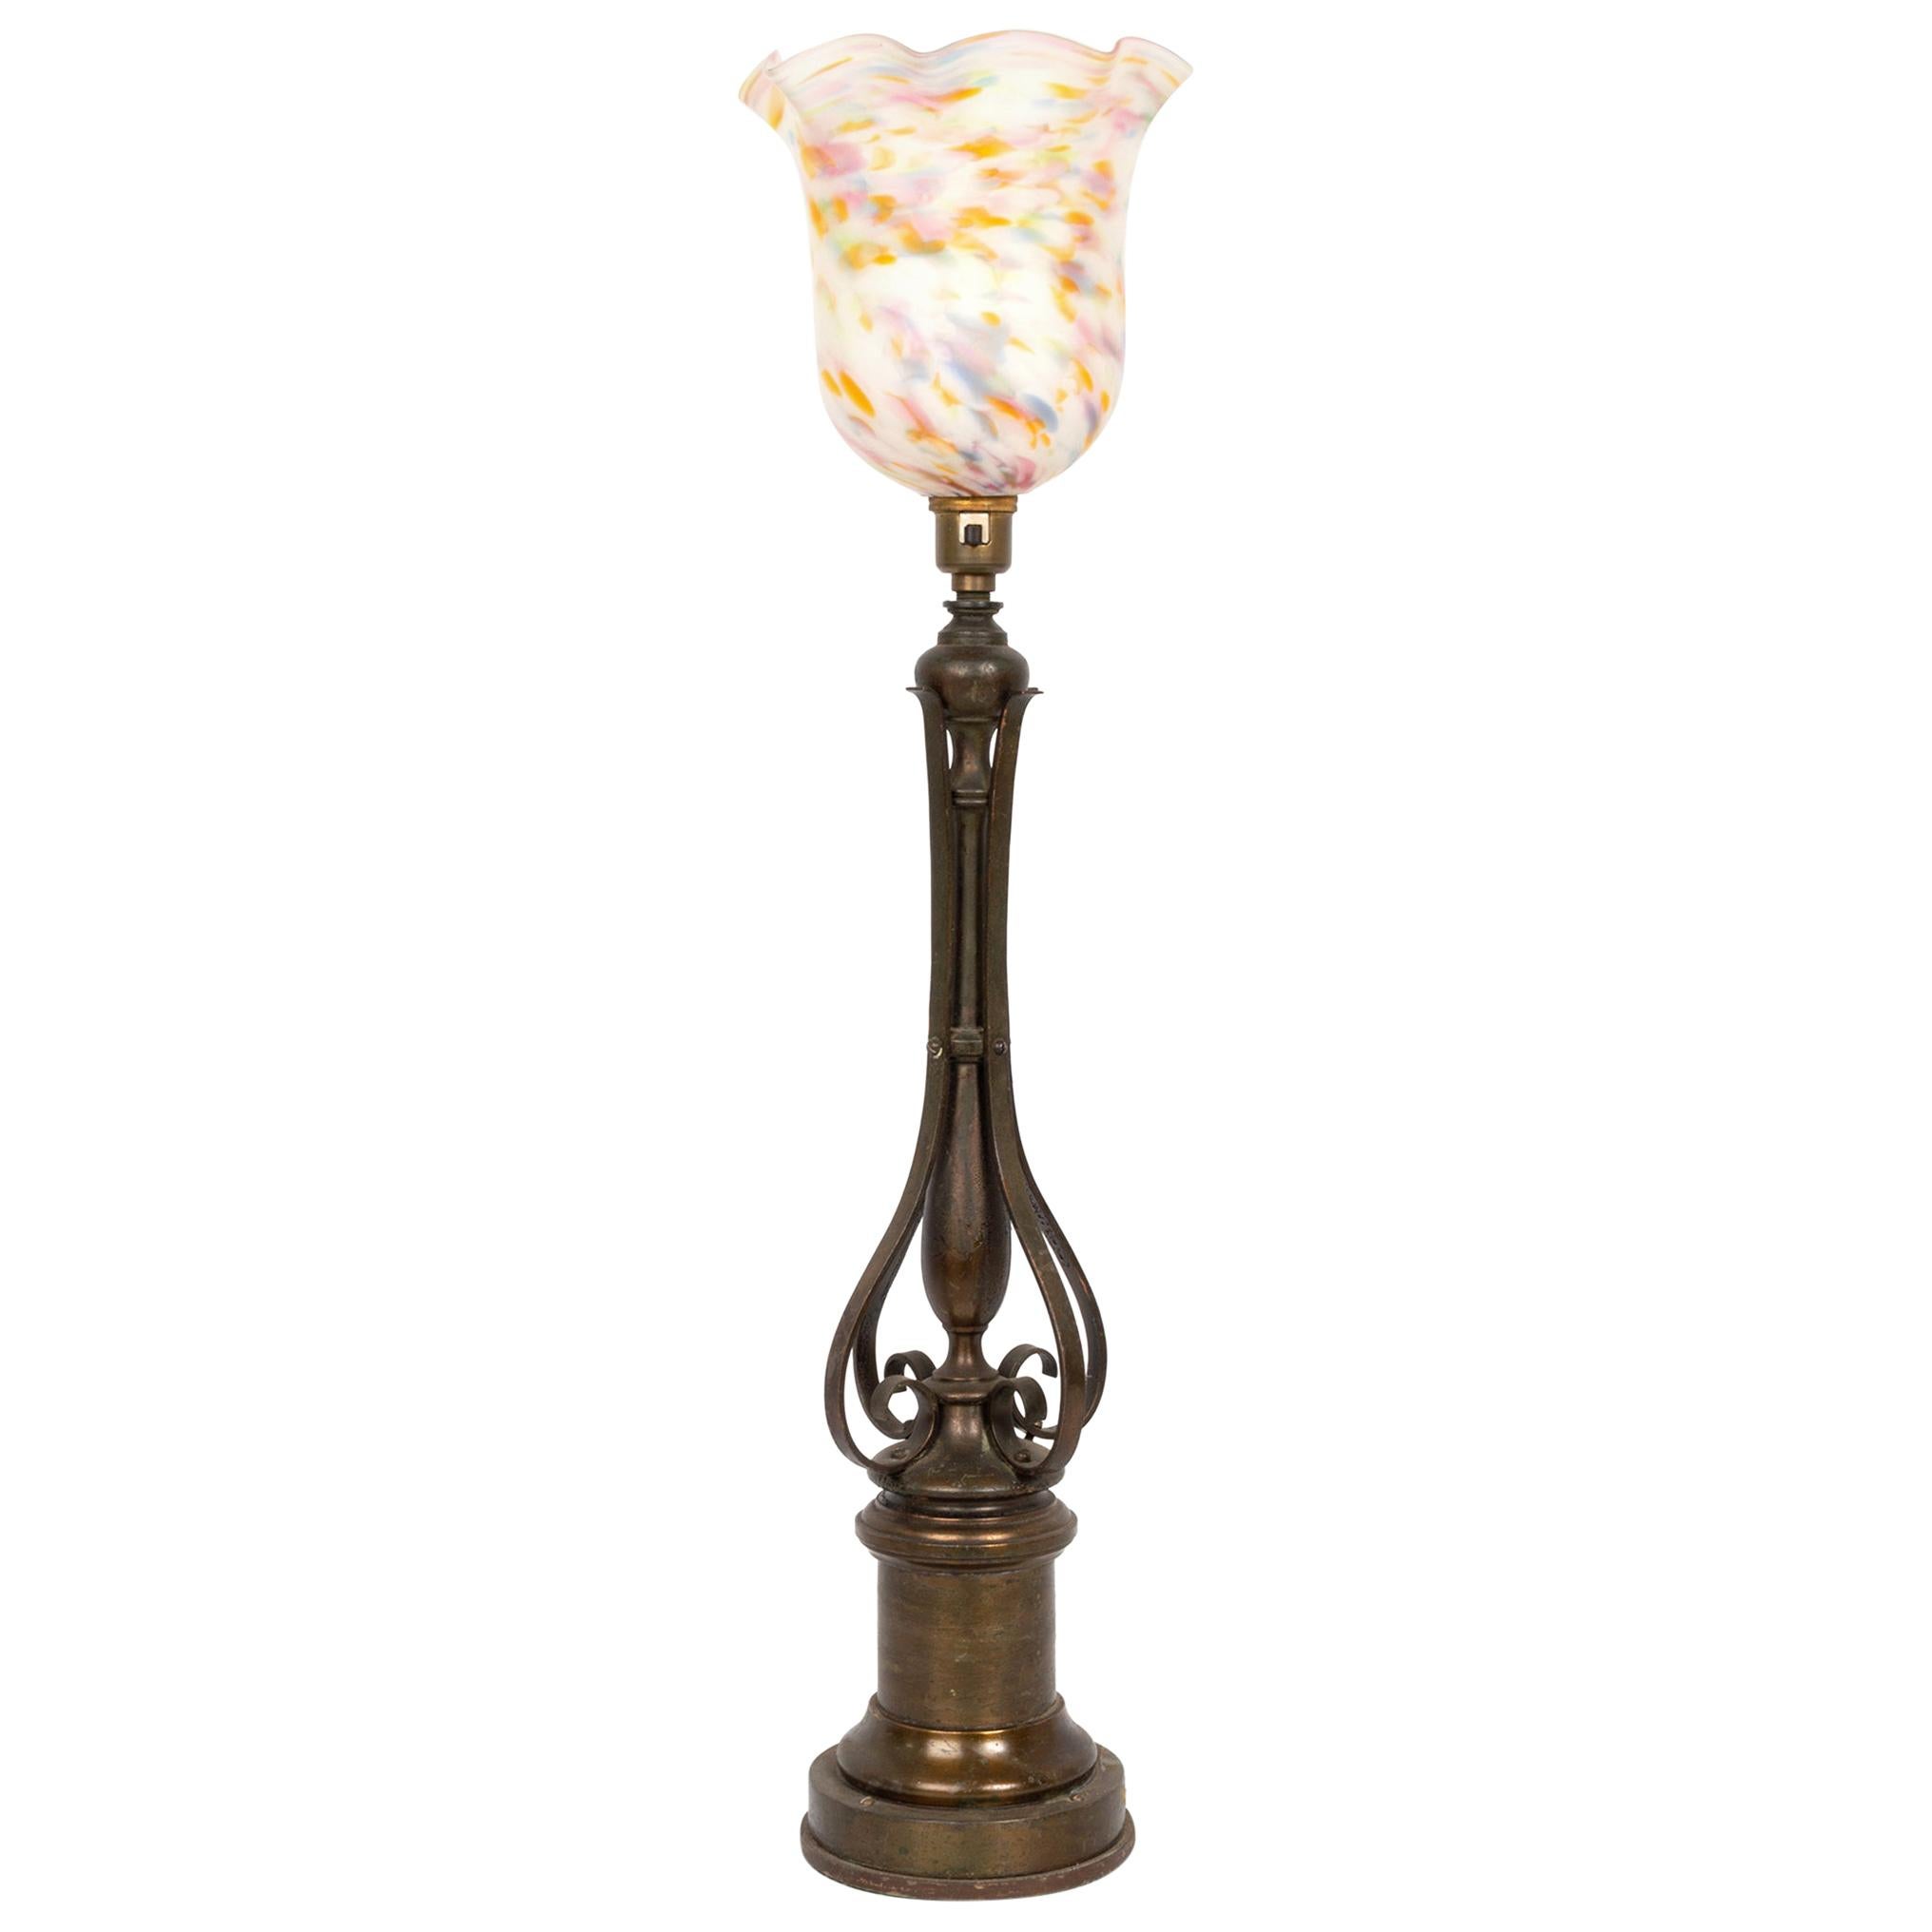 Viktorianische Arts and Crafts-Messinglampe mit Vaseline-Glasschirm, England, um 1895